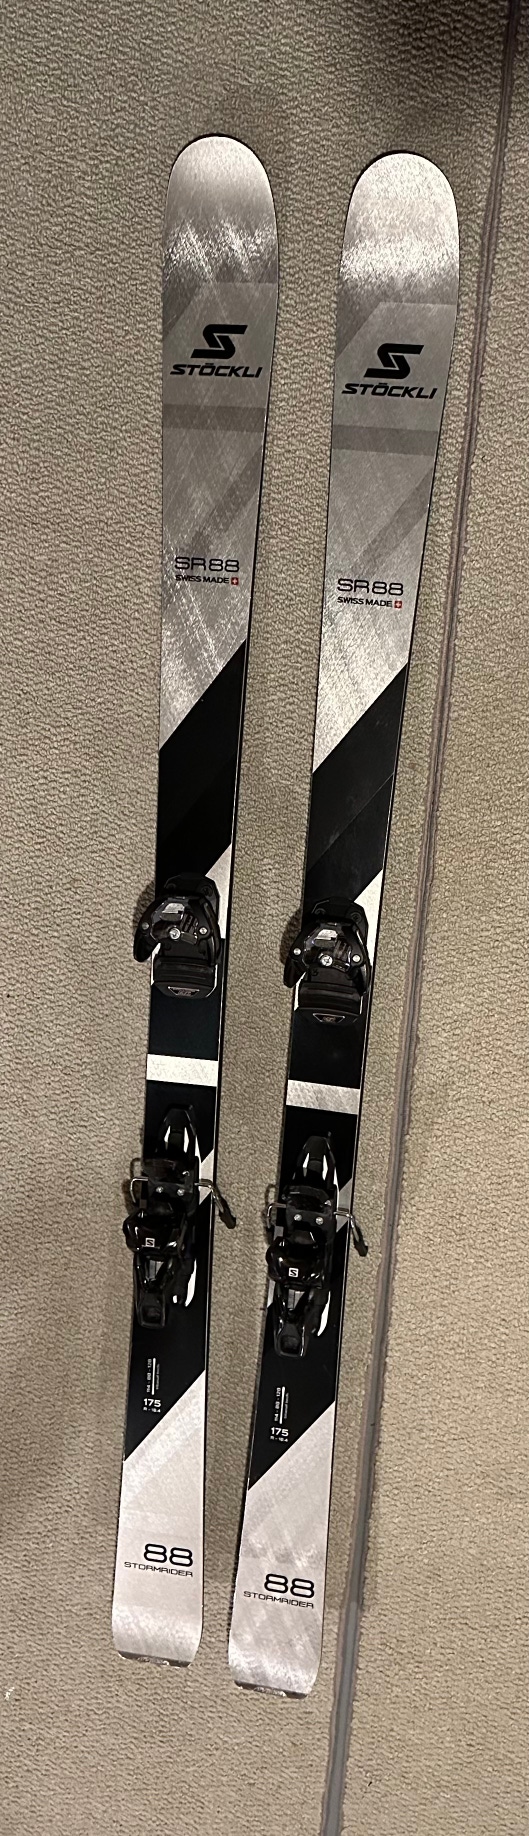 2023 Stockli Stormrider88 skis 175cm with Salomon Warden11 bindings